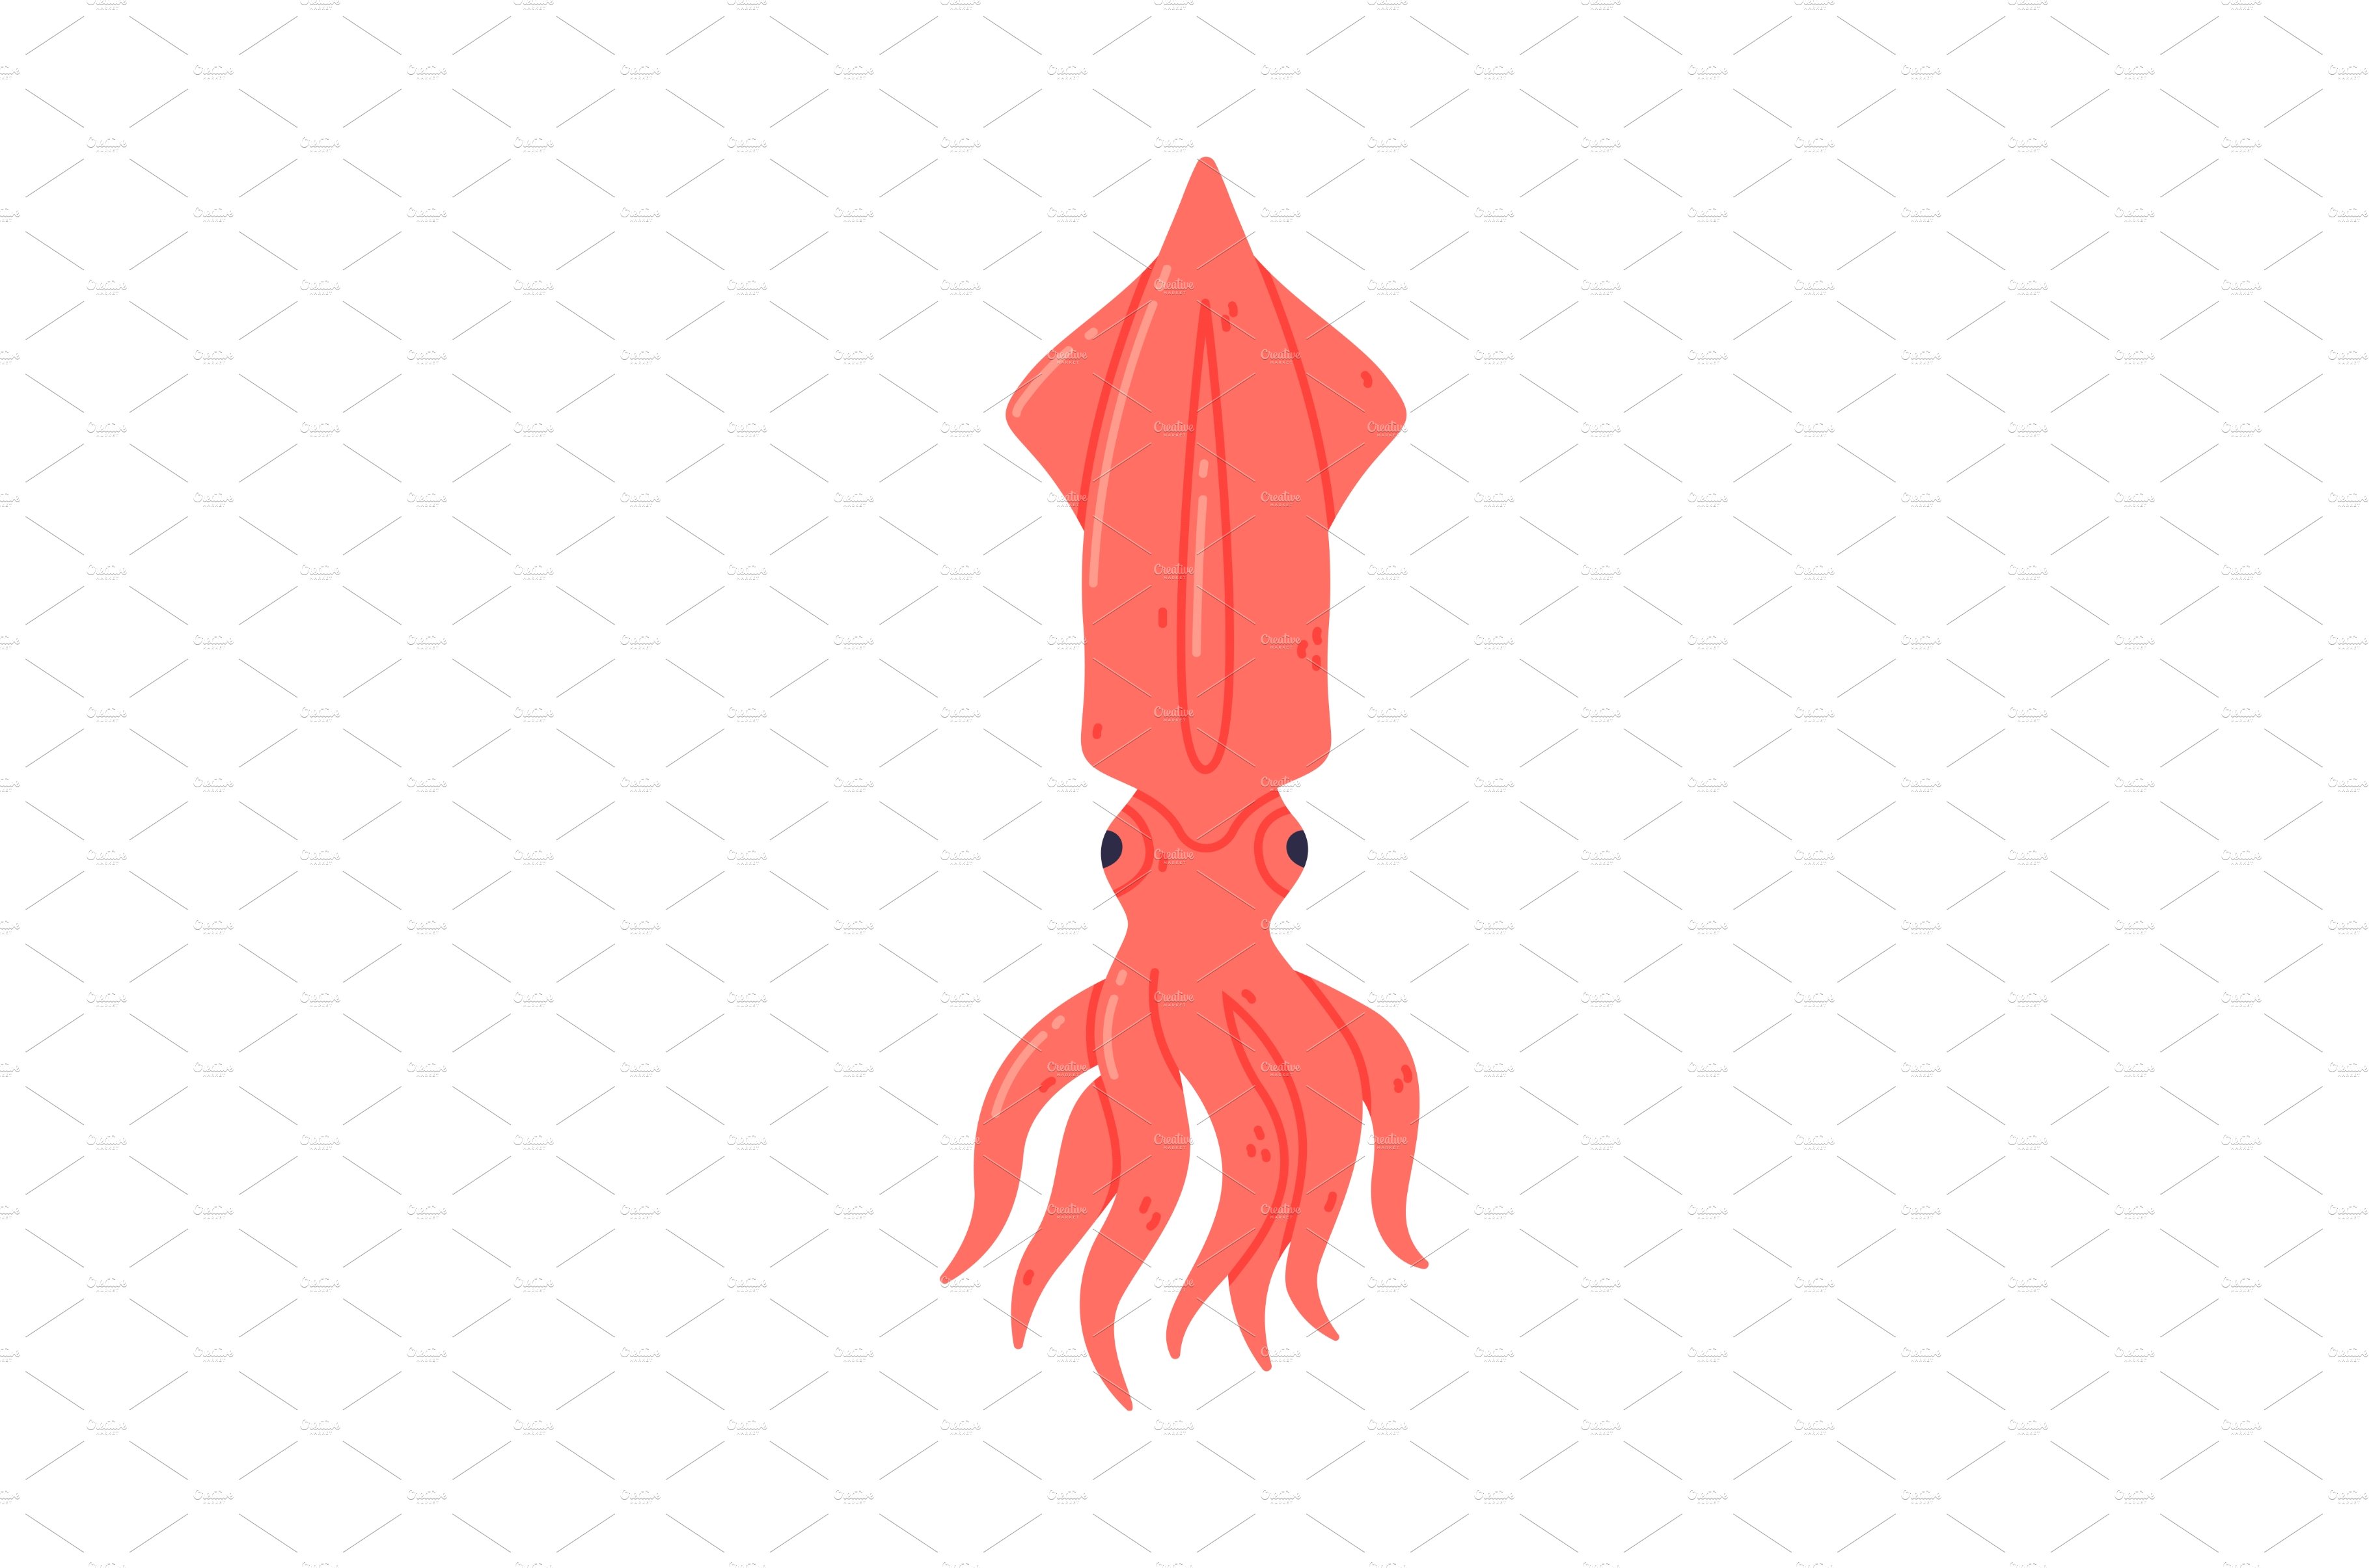 Squid or Calamari as Seafood and cover image.